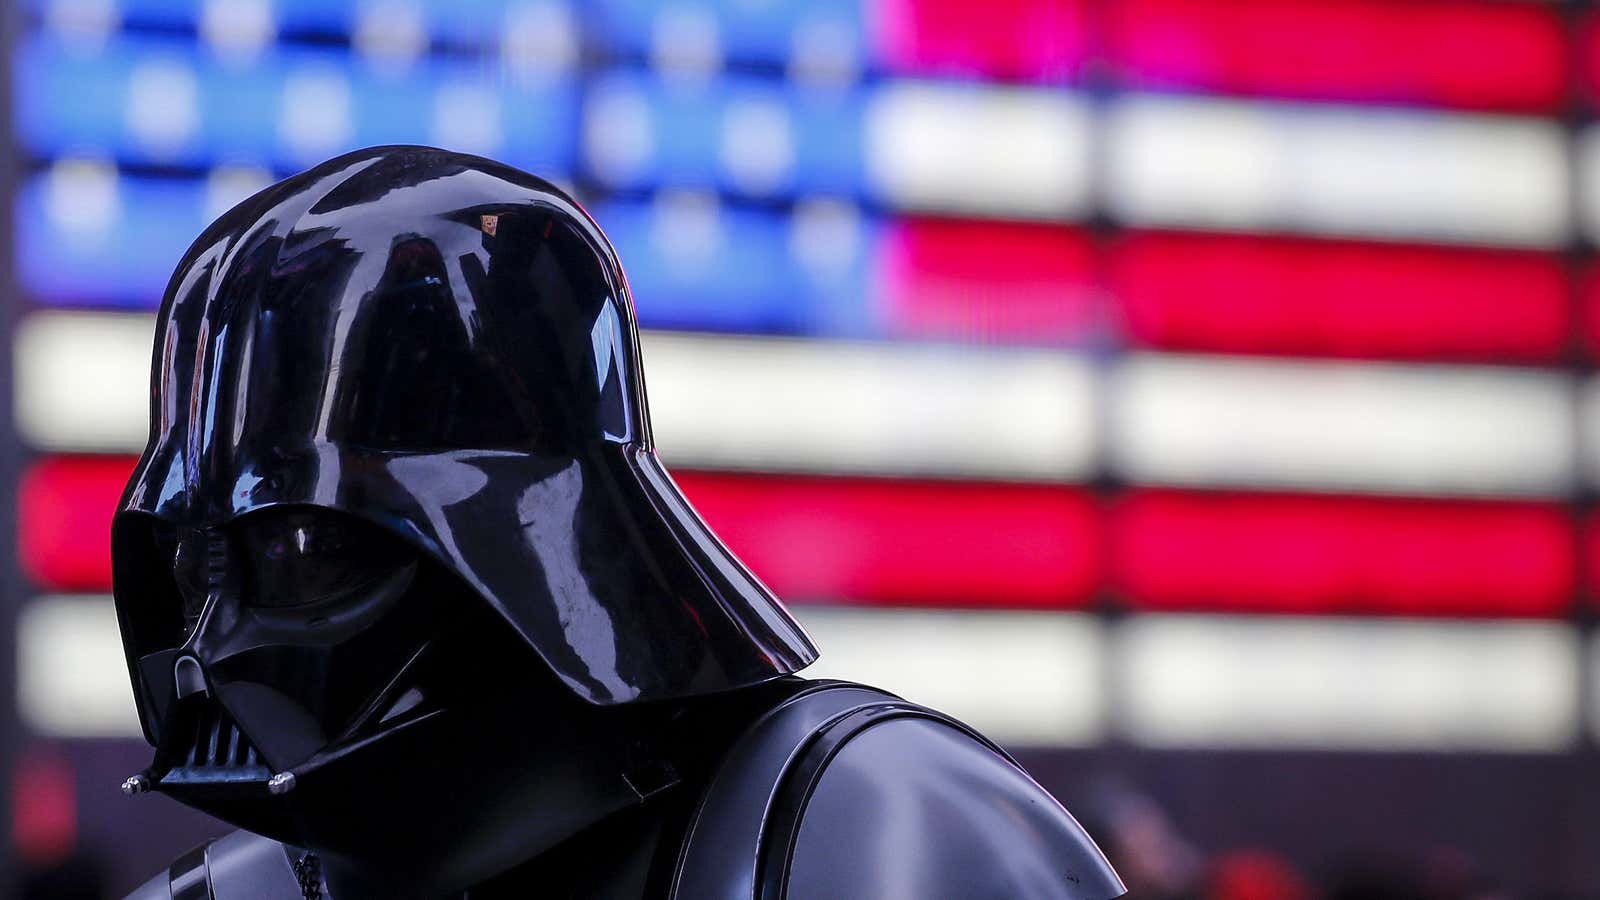 Vader for America.